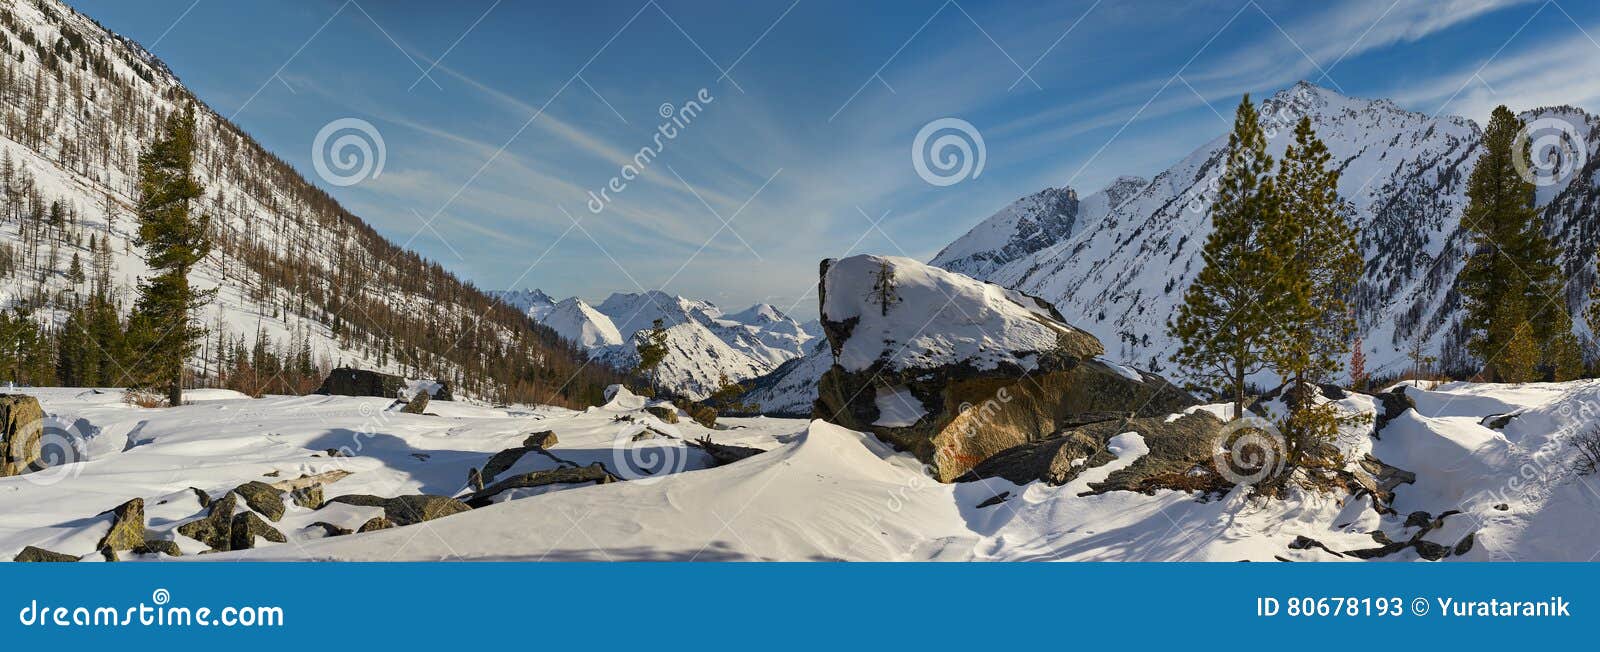 beautiful winter landscape, altai mountains, siberia, russia.